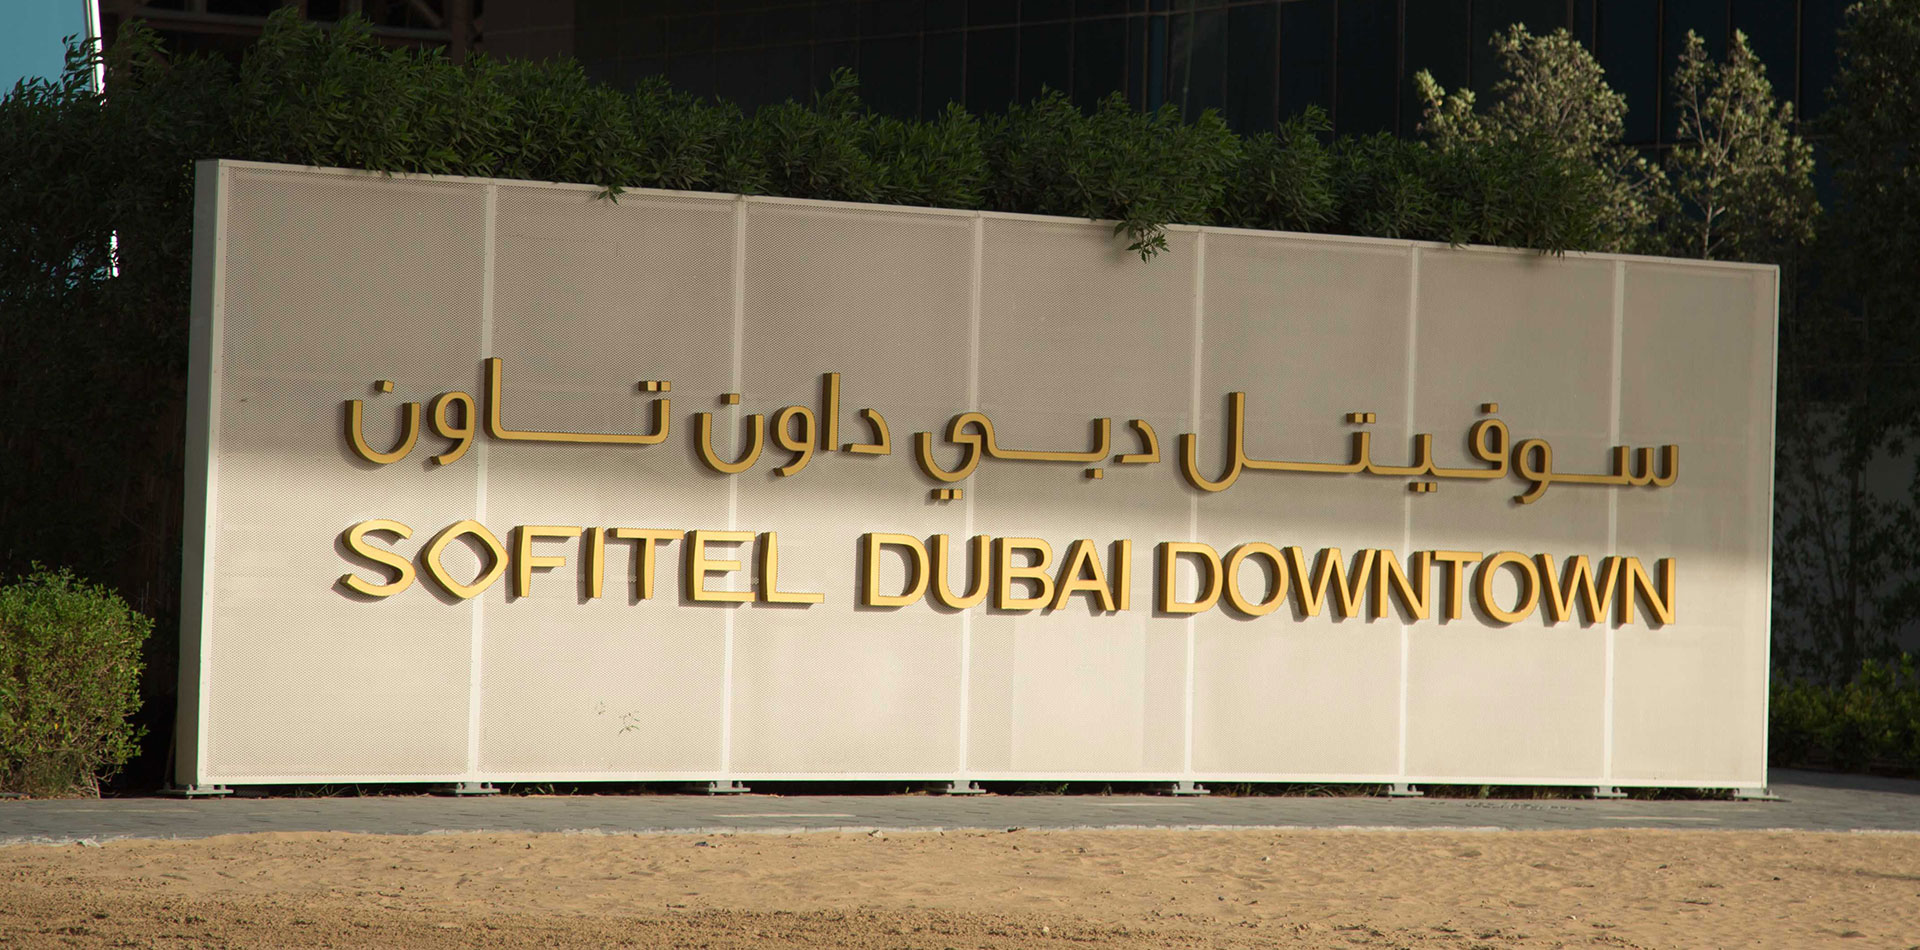 Monument Signage of Sofitel Dubai Downtown